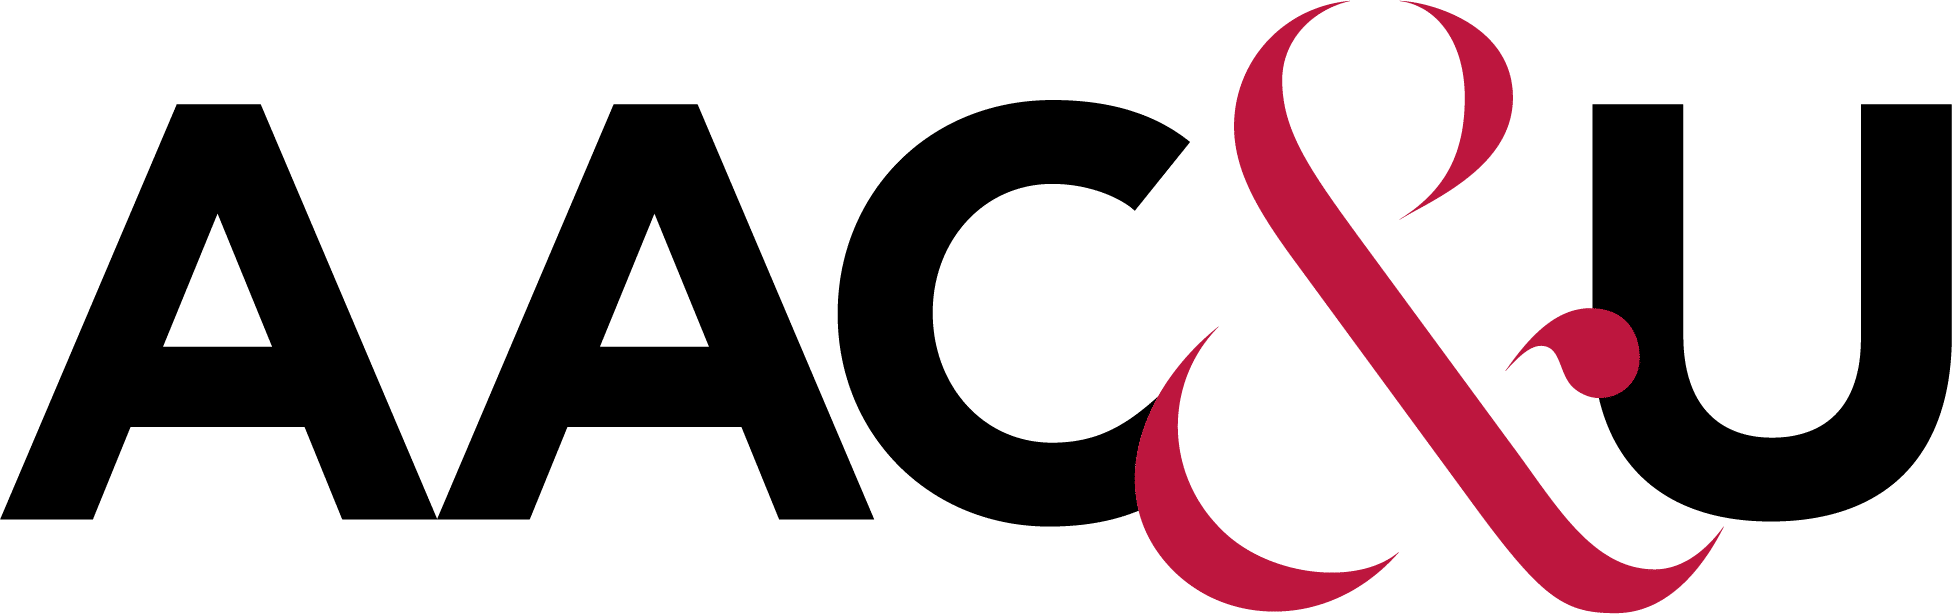 AAC&U_Logo_Primary_RGB